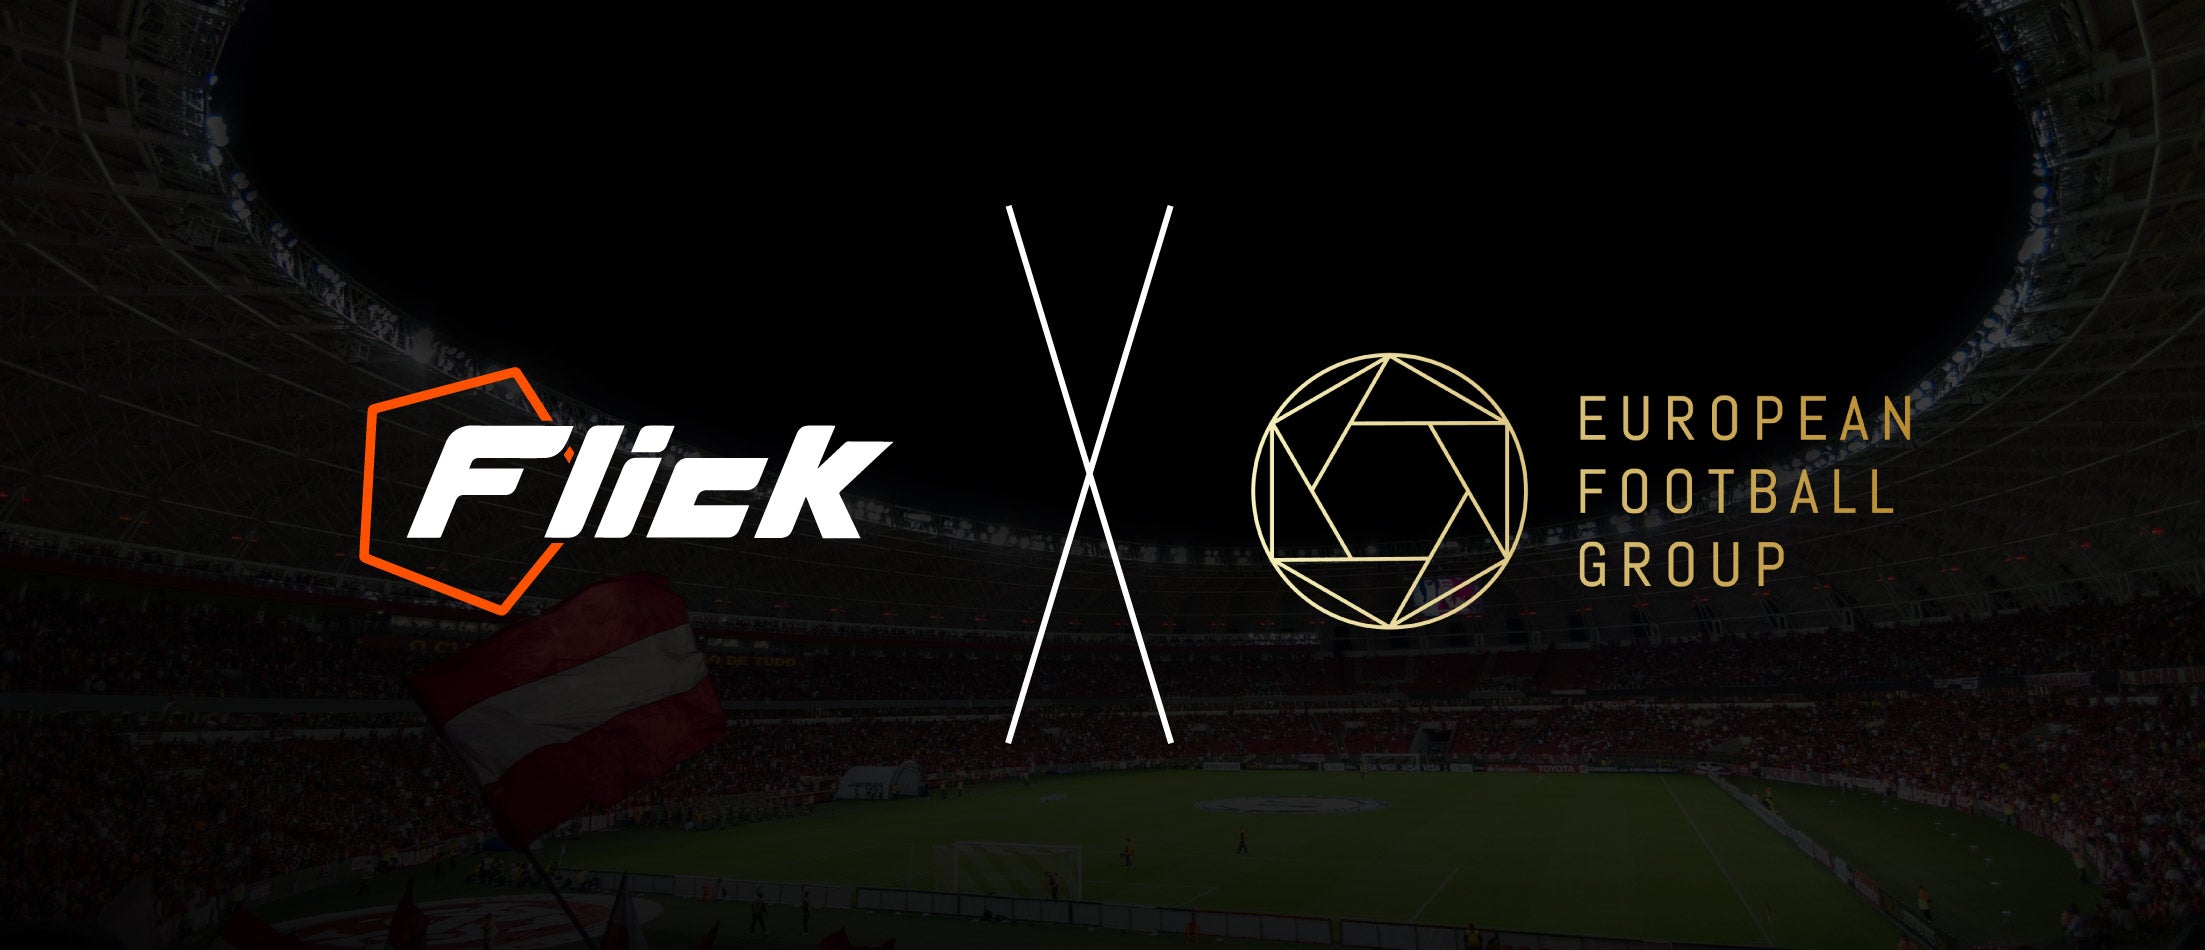 Flick and European Football Group Announce Long-Term Partnership